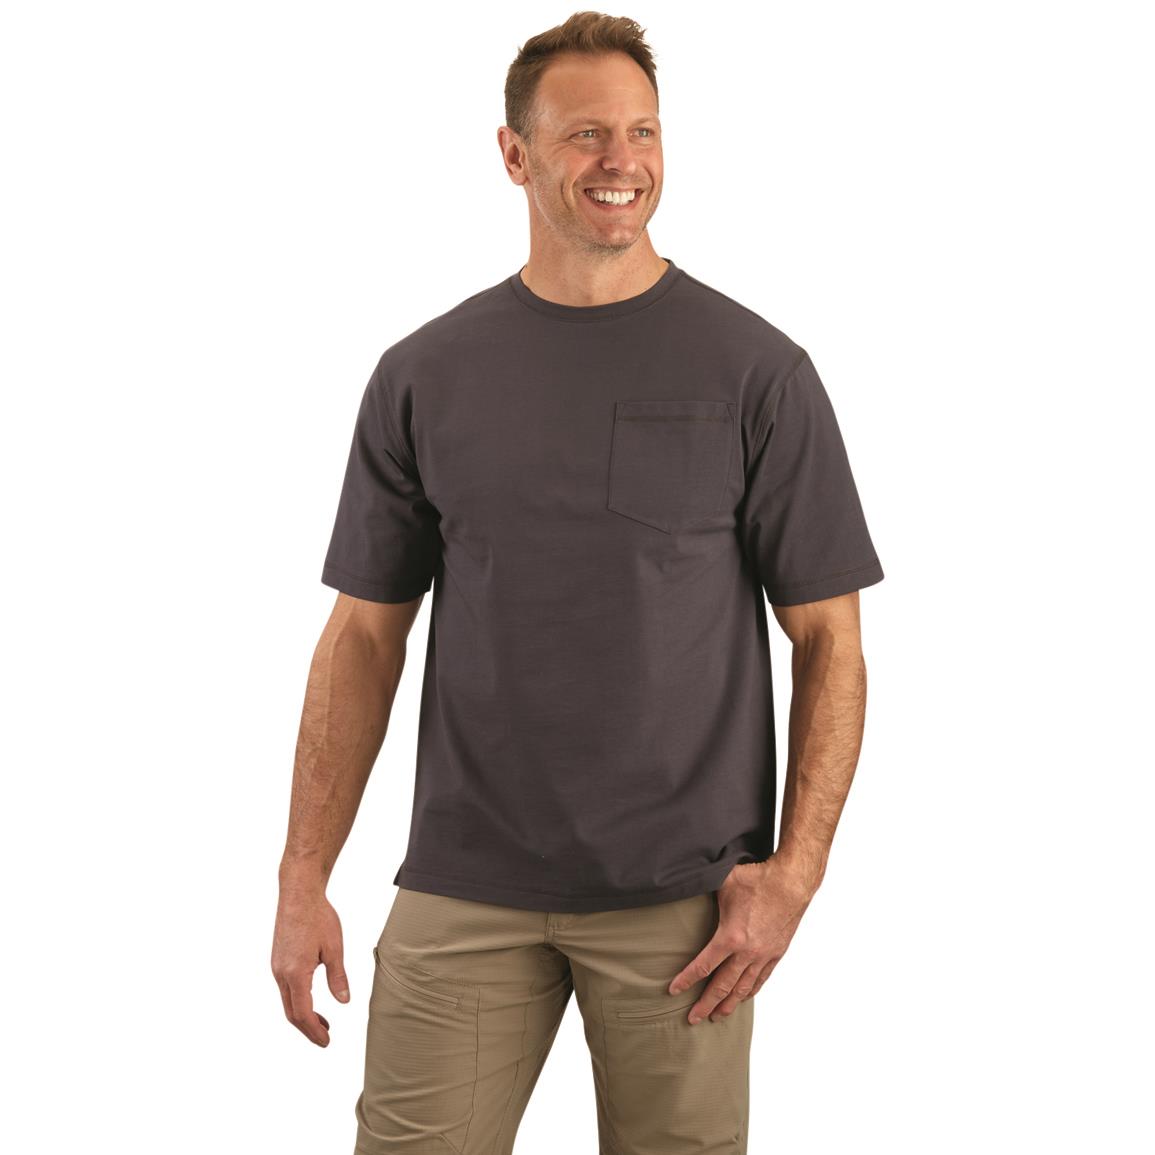 Guide Gear Men's Stain Kicker Short Sleeve Pocket T Shirt With Teflon, Magnet Gray